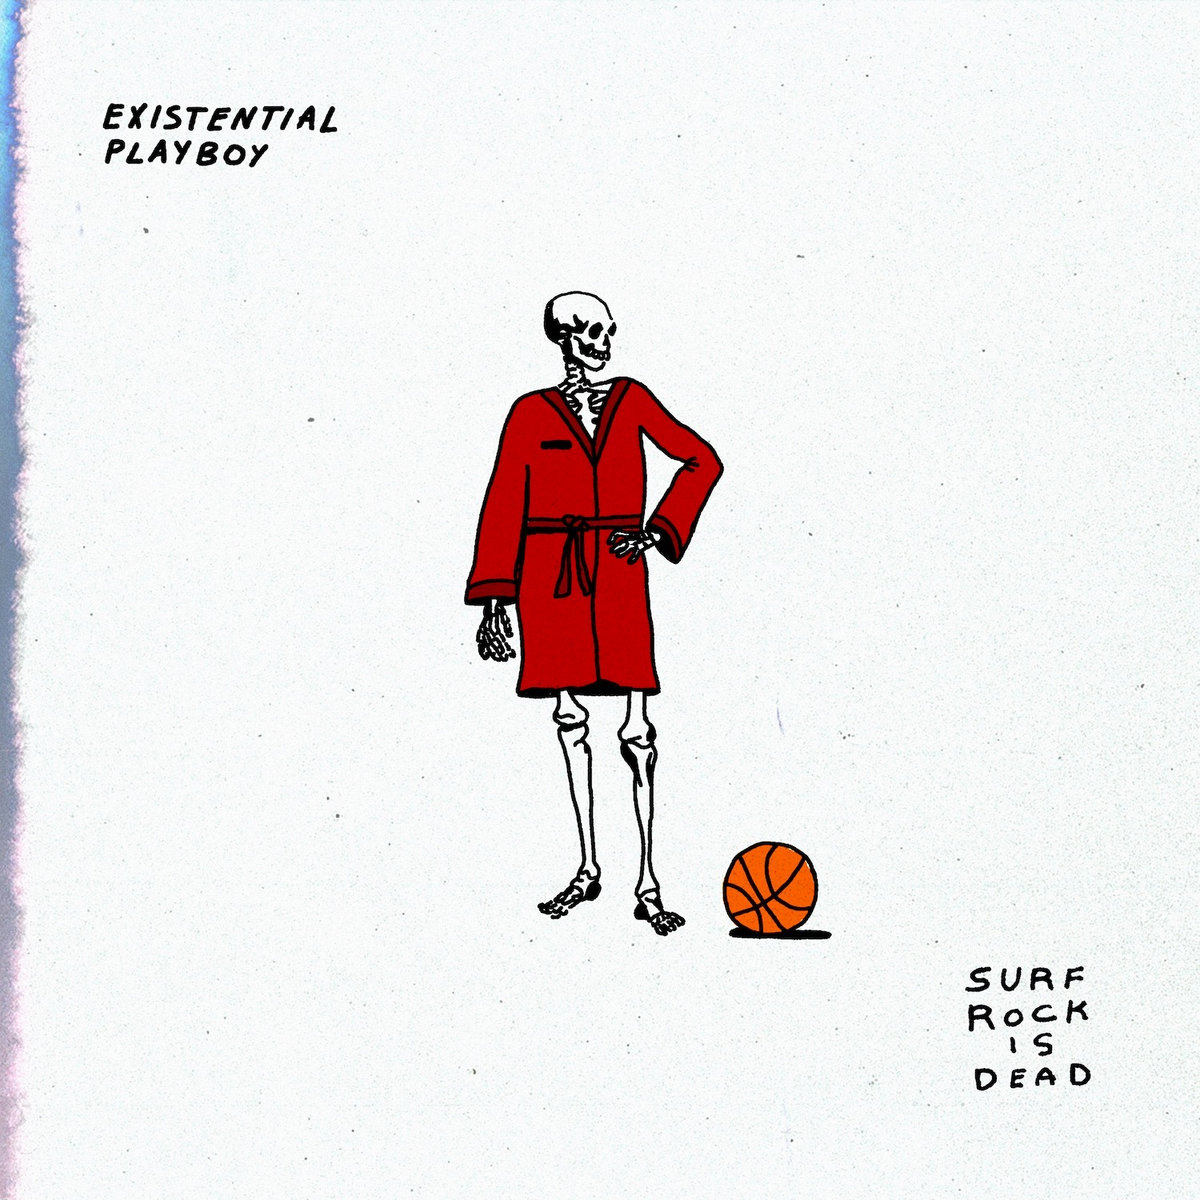 Surf Rock is Dead — Diabolik cover artwork